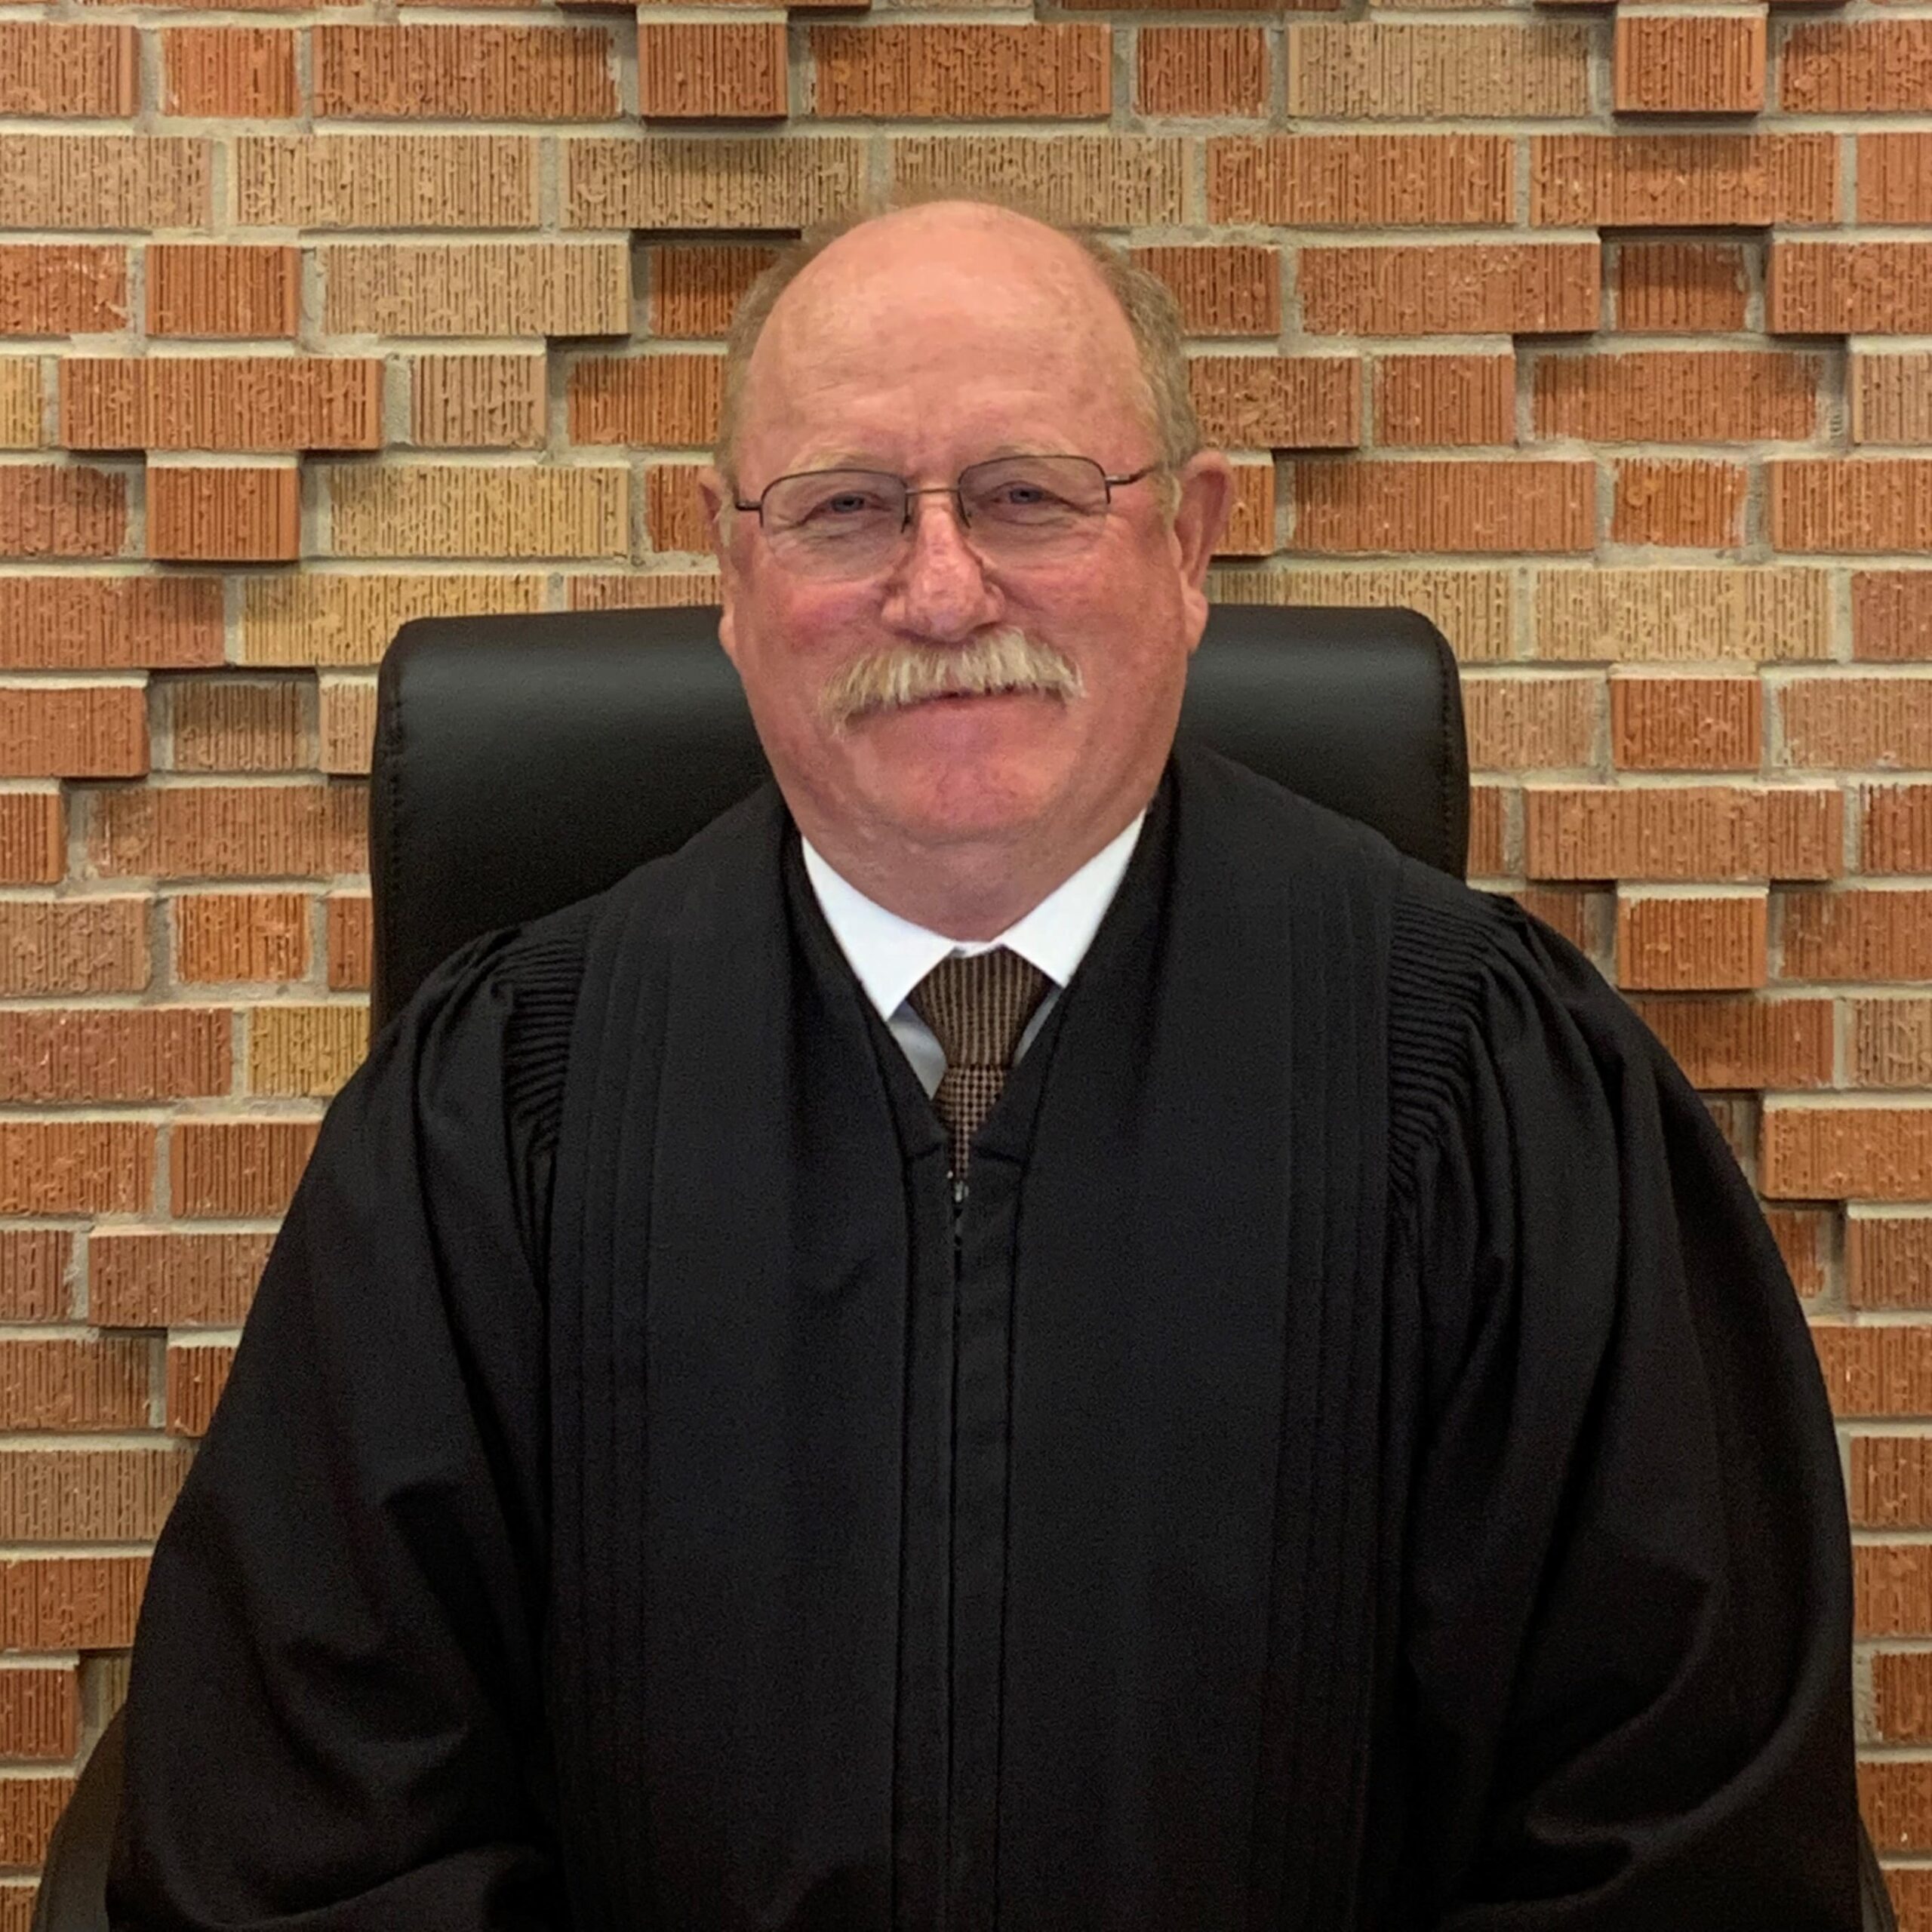 Hon. Mark J. Temaat, District Magistrate Judge, Logan County, Kansas - edit